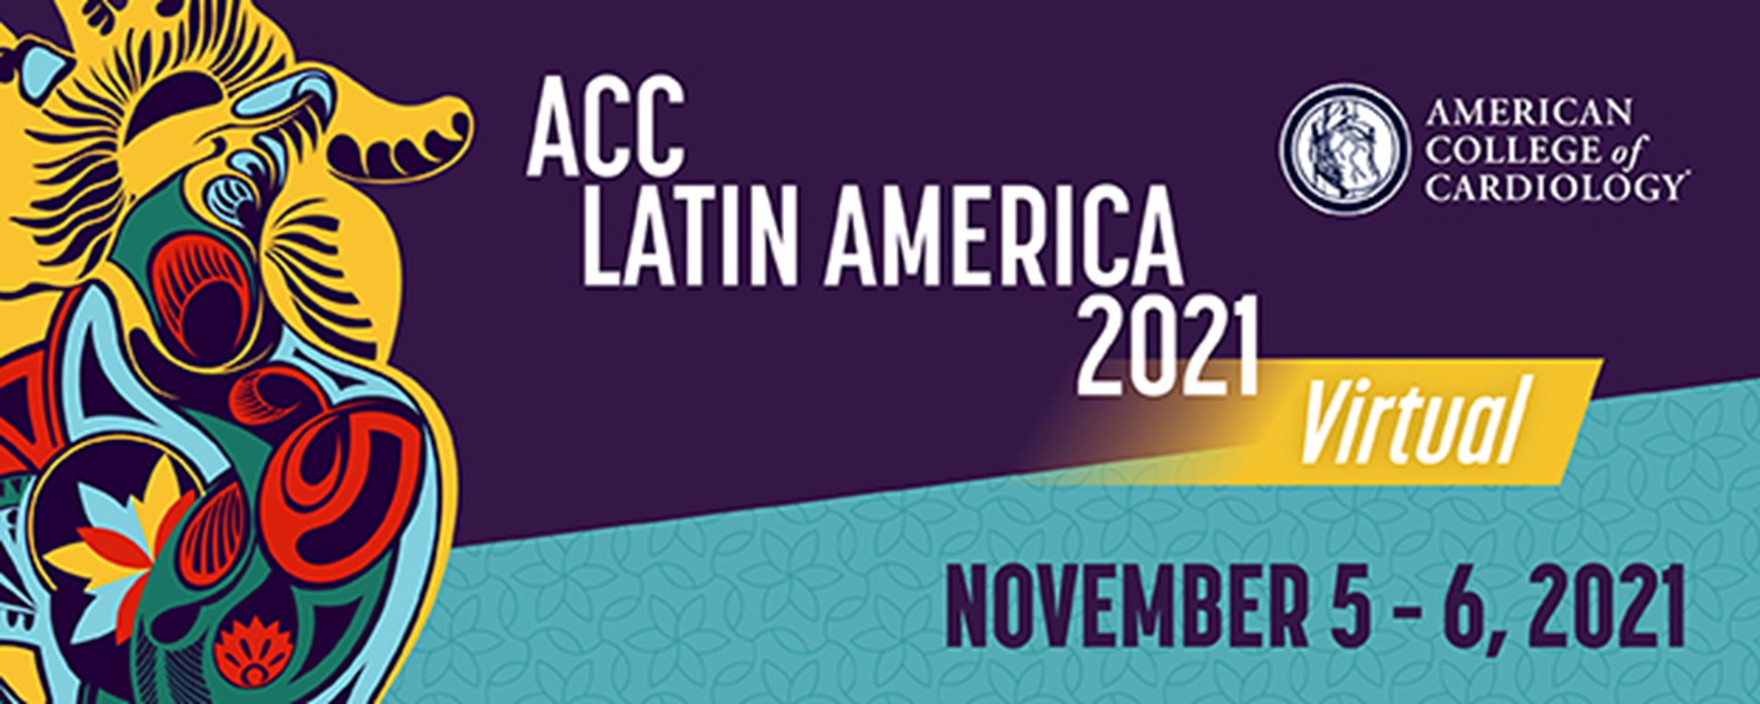 ACC Latin America